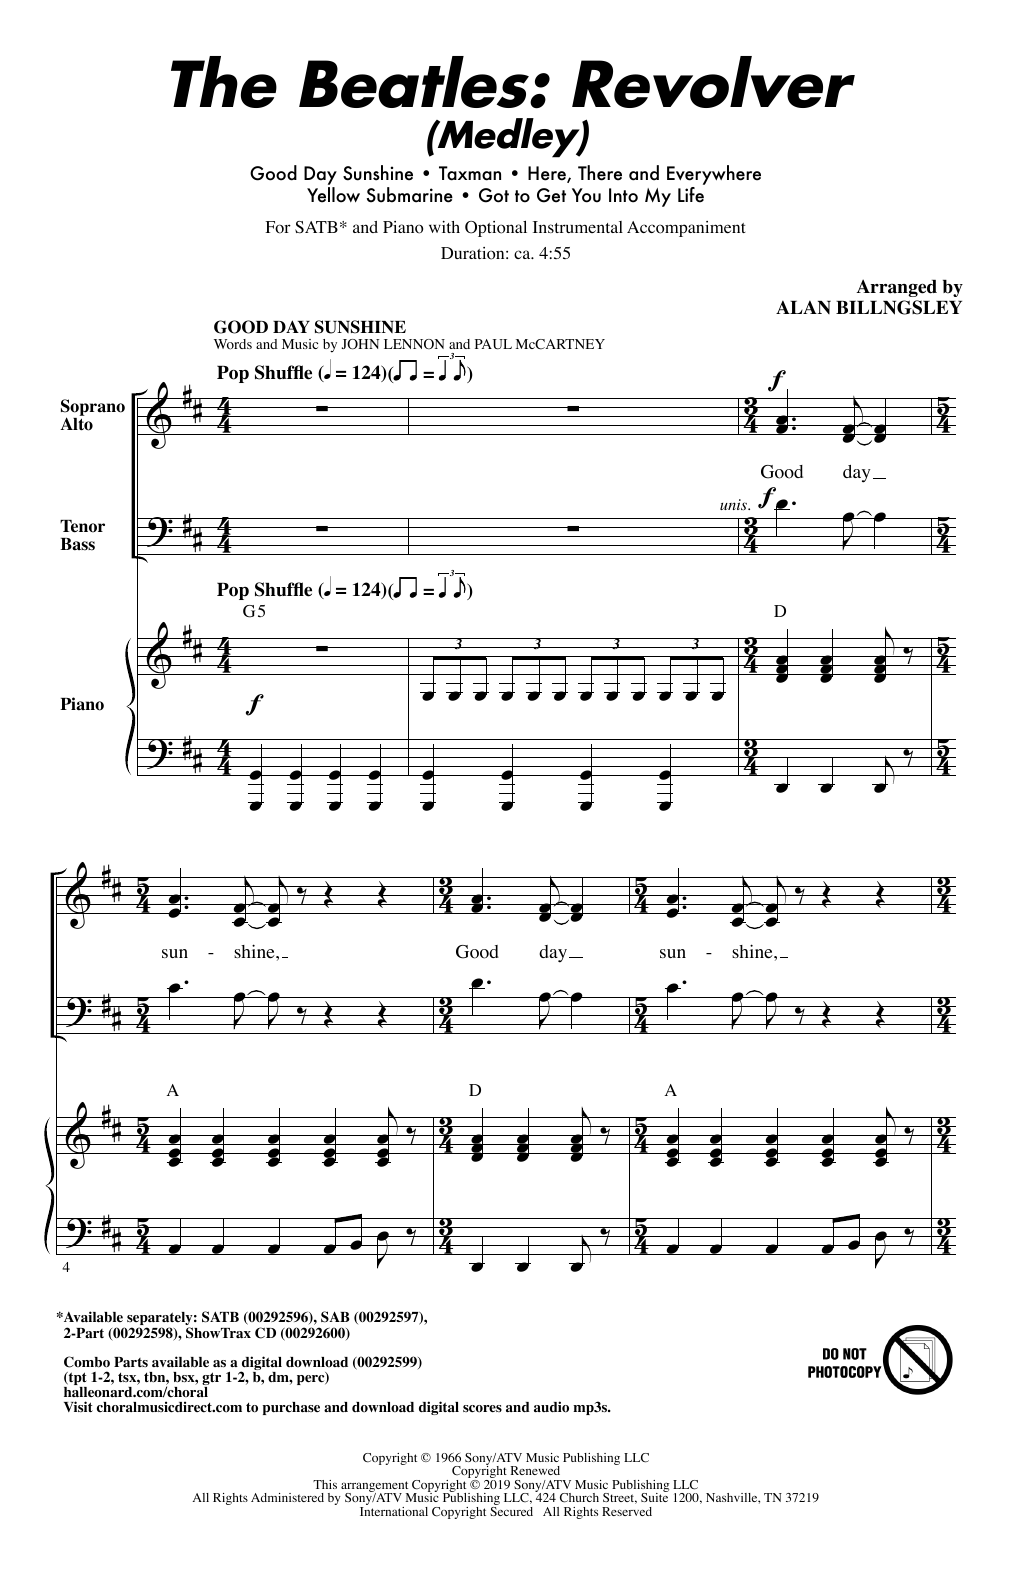 The Beatles The Beatles: Revolver (Medley) (arr. Alan Billingsley) Sheet Music Notes & Chords for SATB Choir - Download or Print PDF